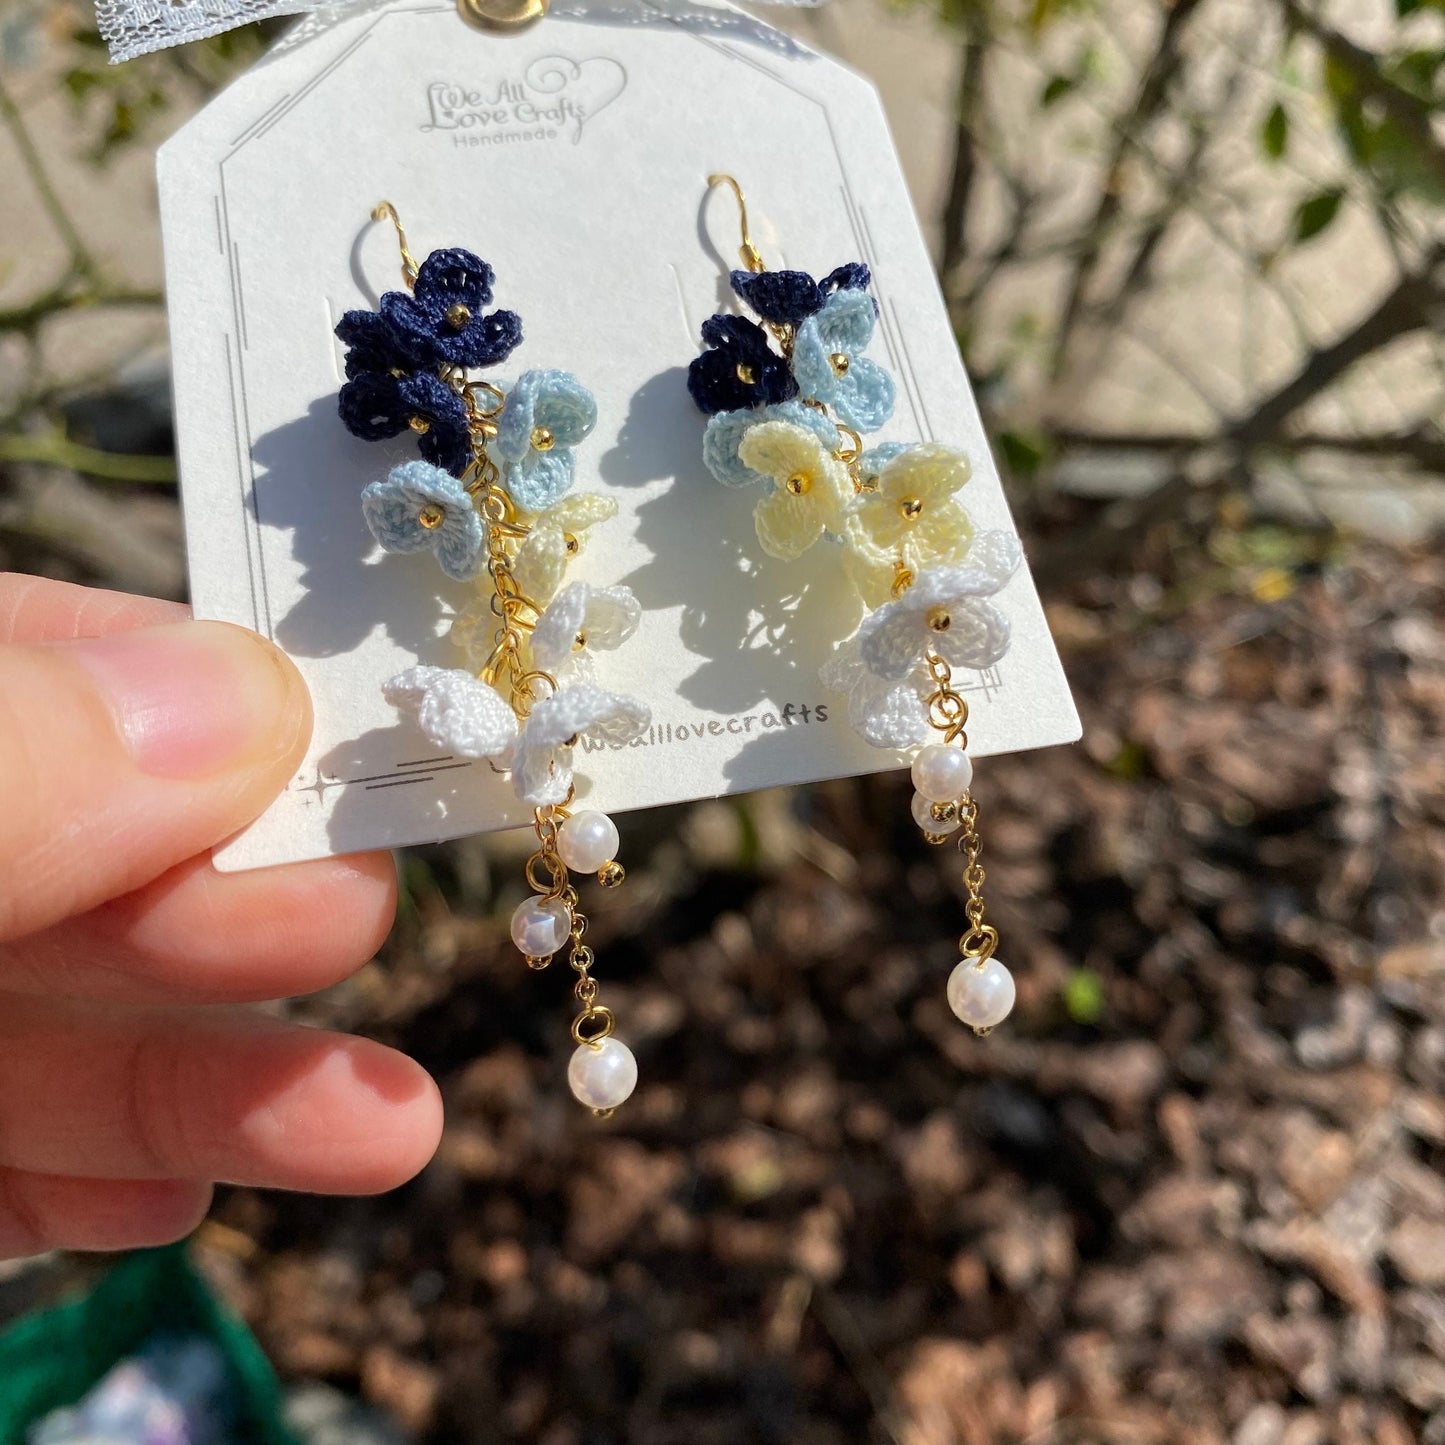 4 shades of Nautical navy ombre flower cluster crochet dangle earrings/Microcrochet/14k gold/gift for her/Knitting handmade jewelry